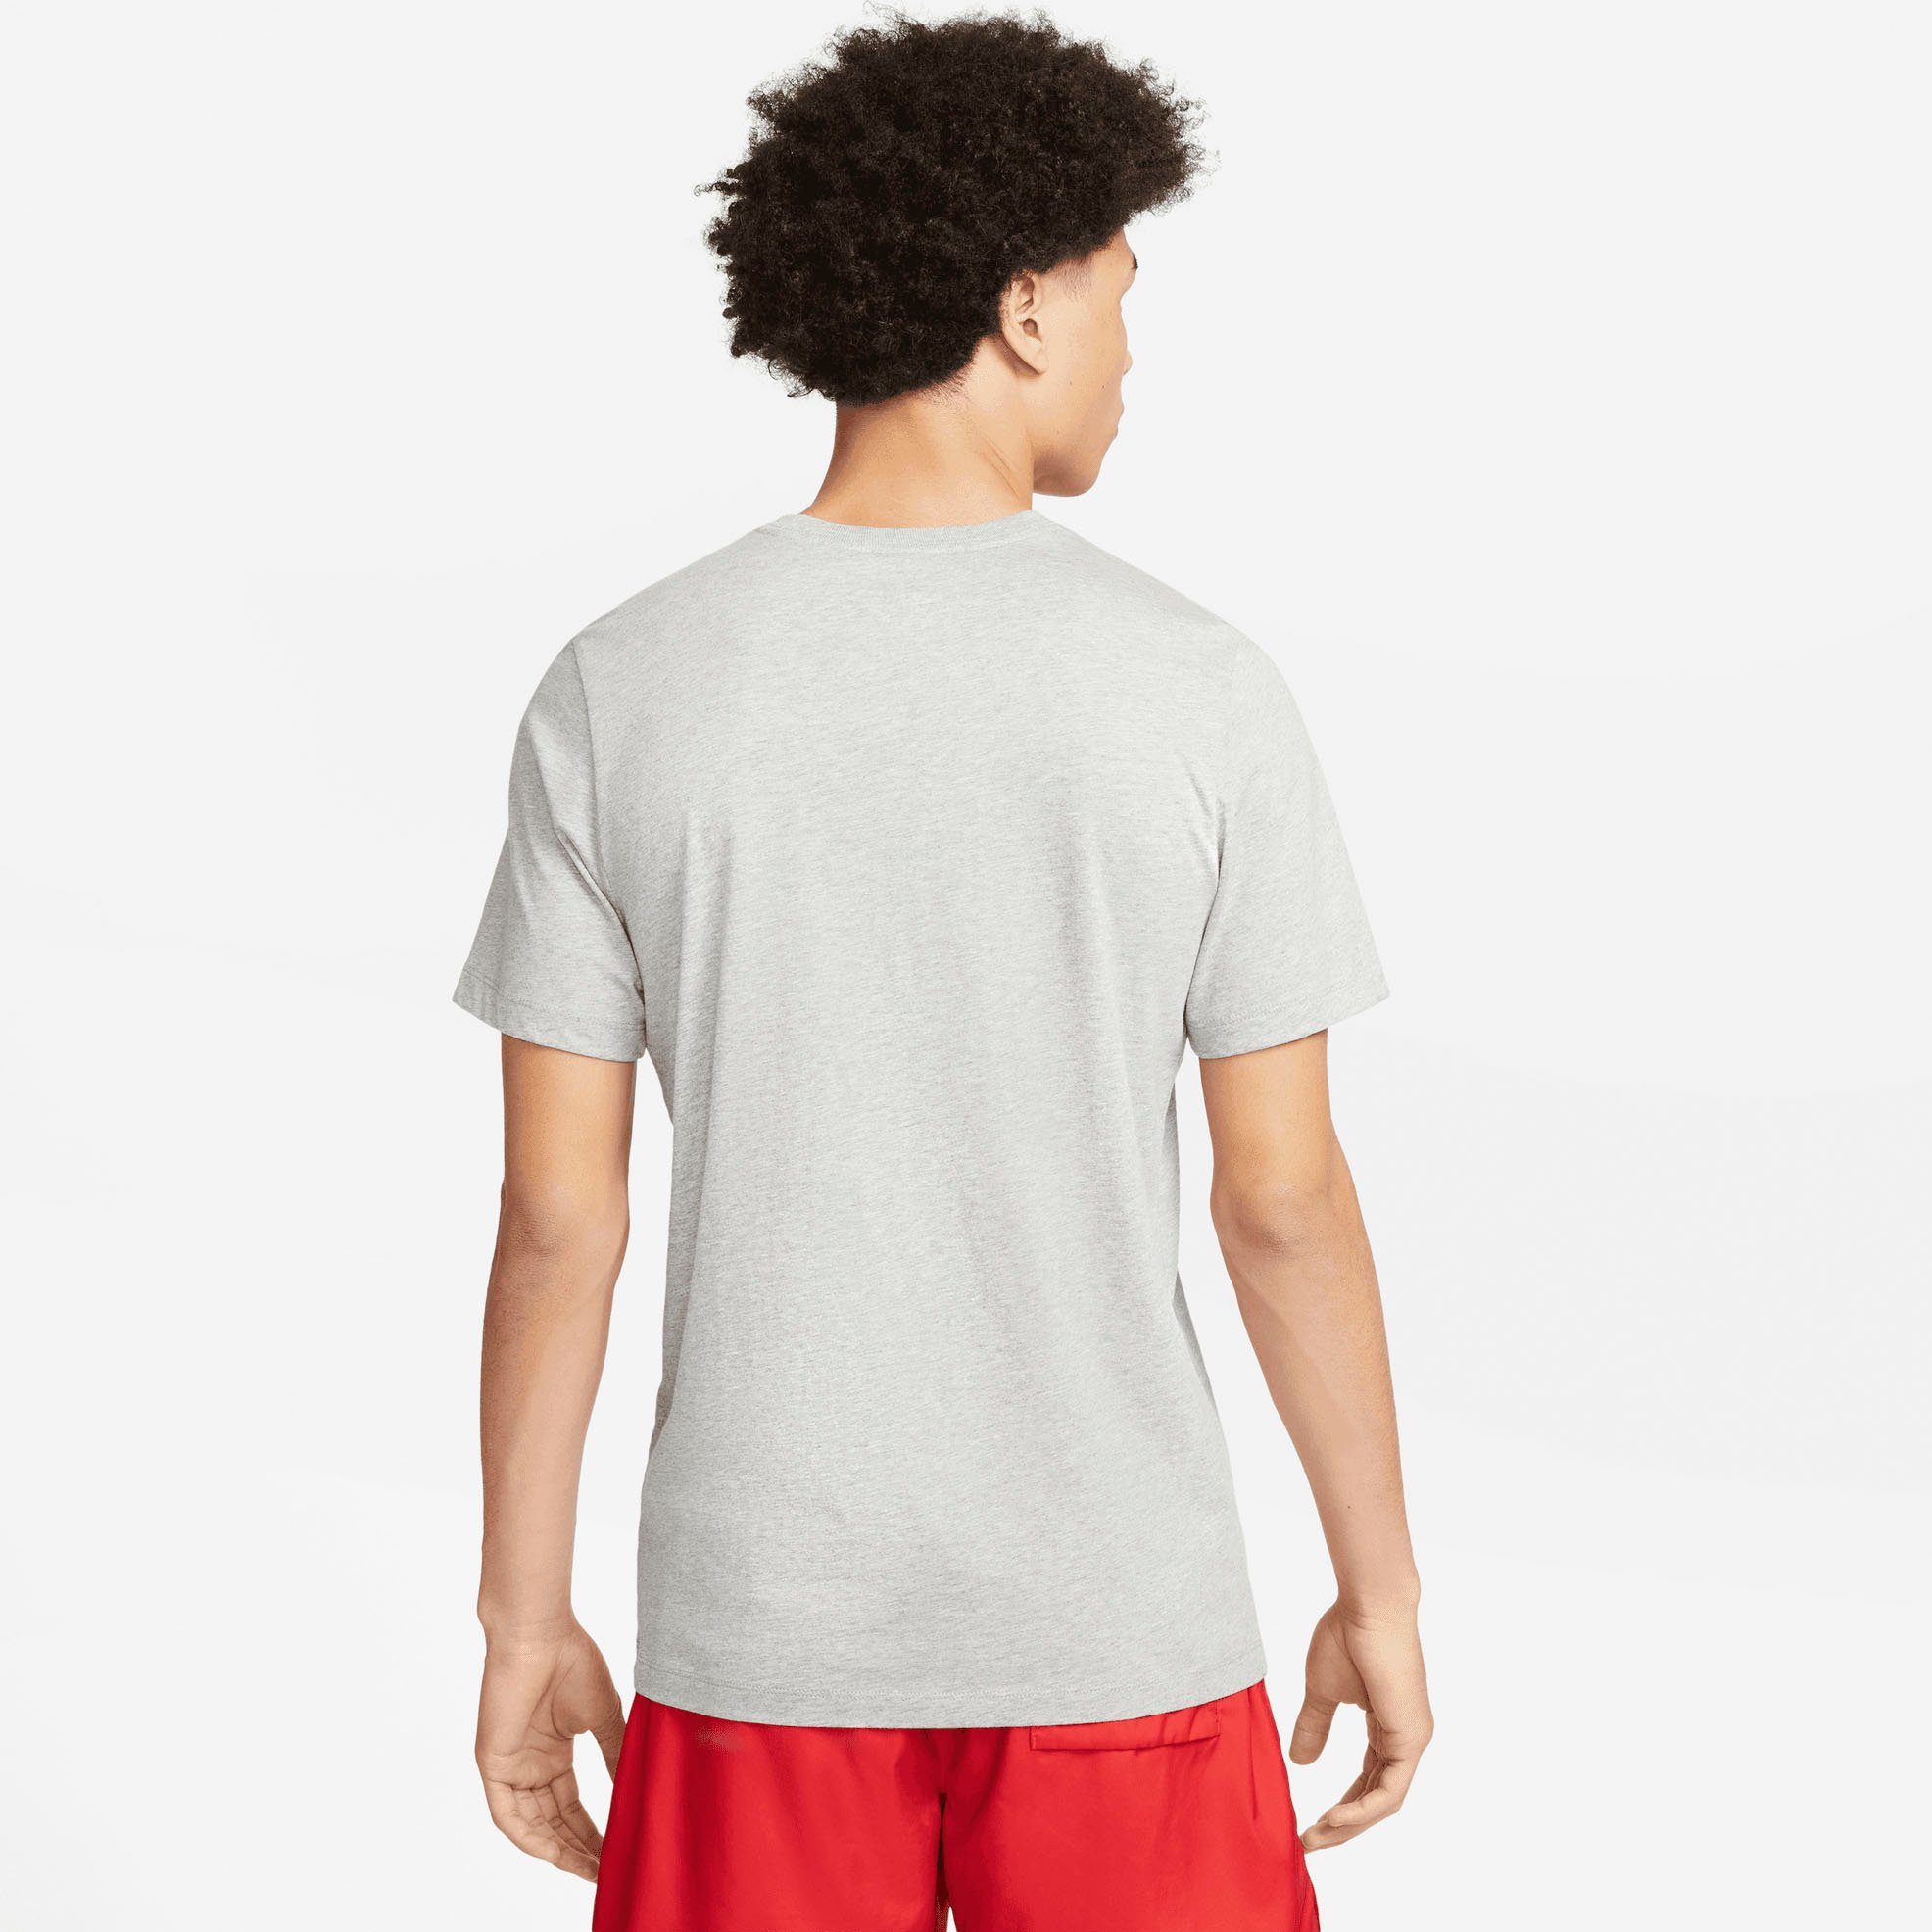 Nike Sportswear HEATHER T-Shirt T-Shirt DK GREY Men's